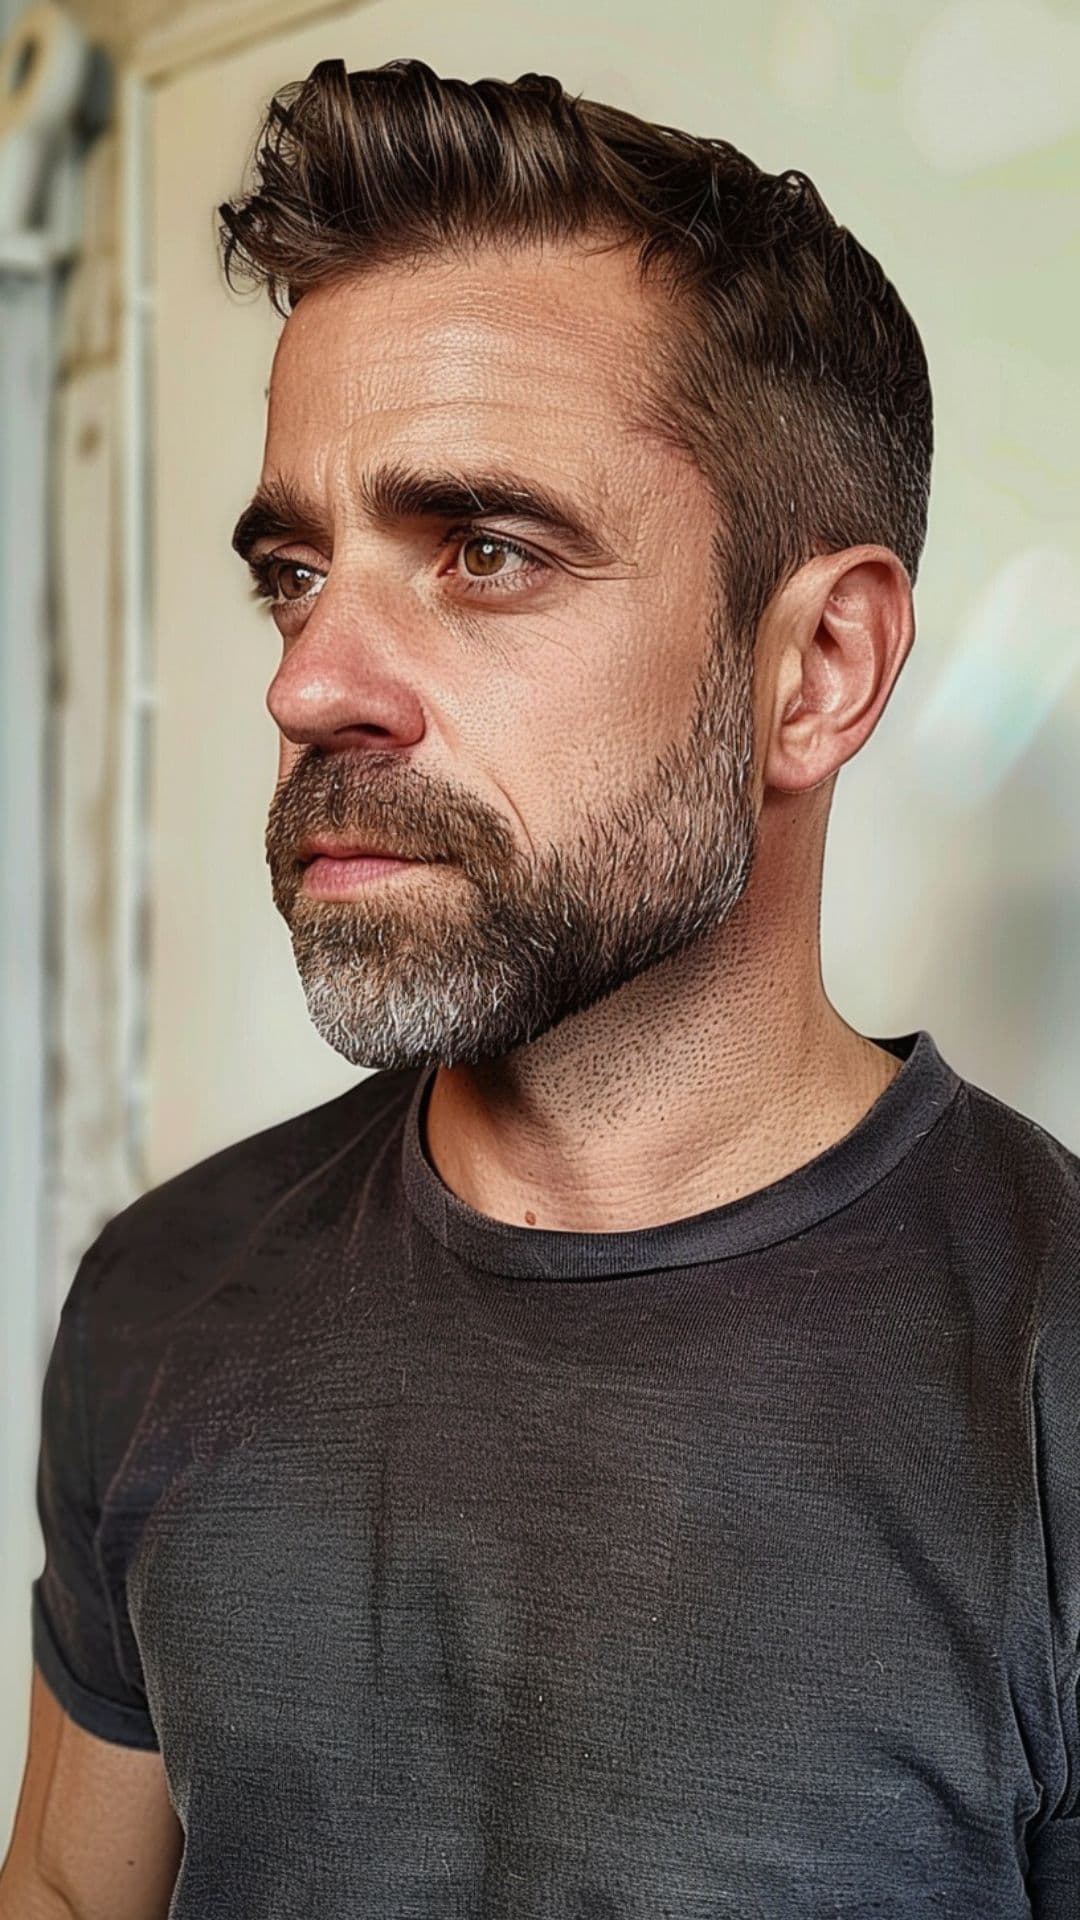 A man modelling an undercut with beard.